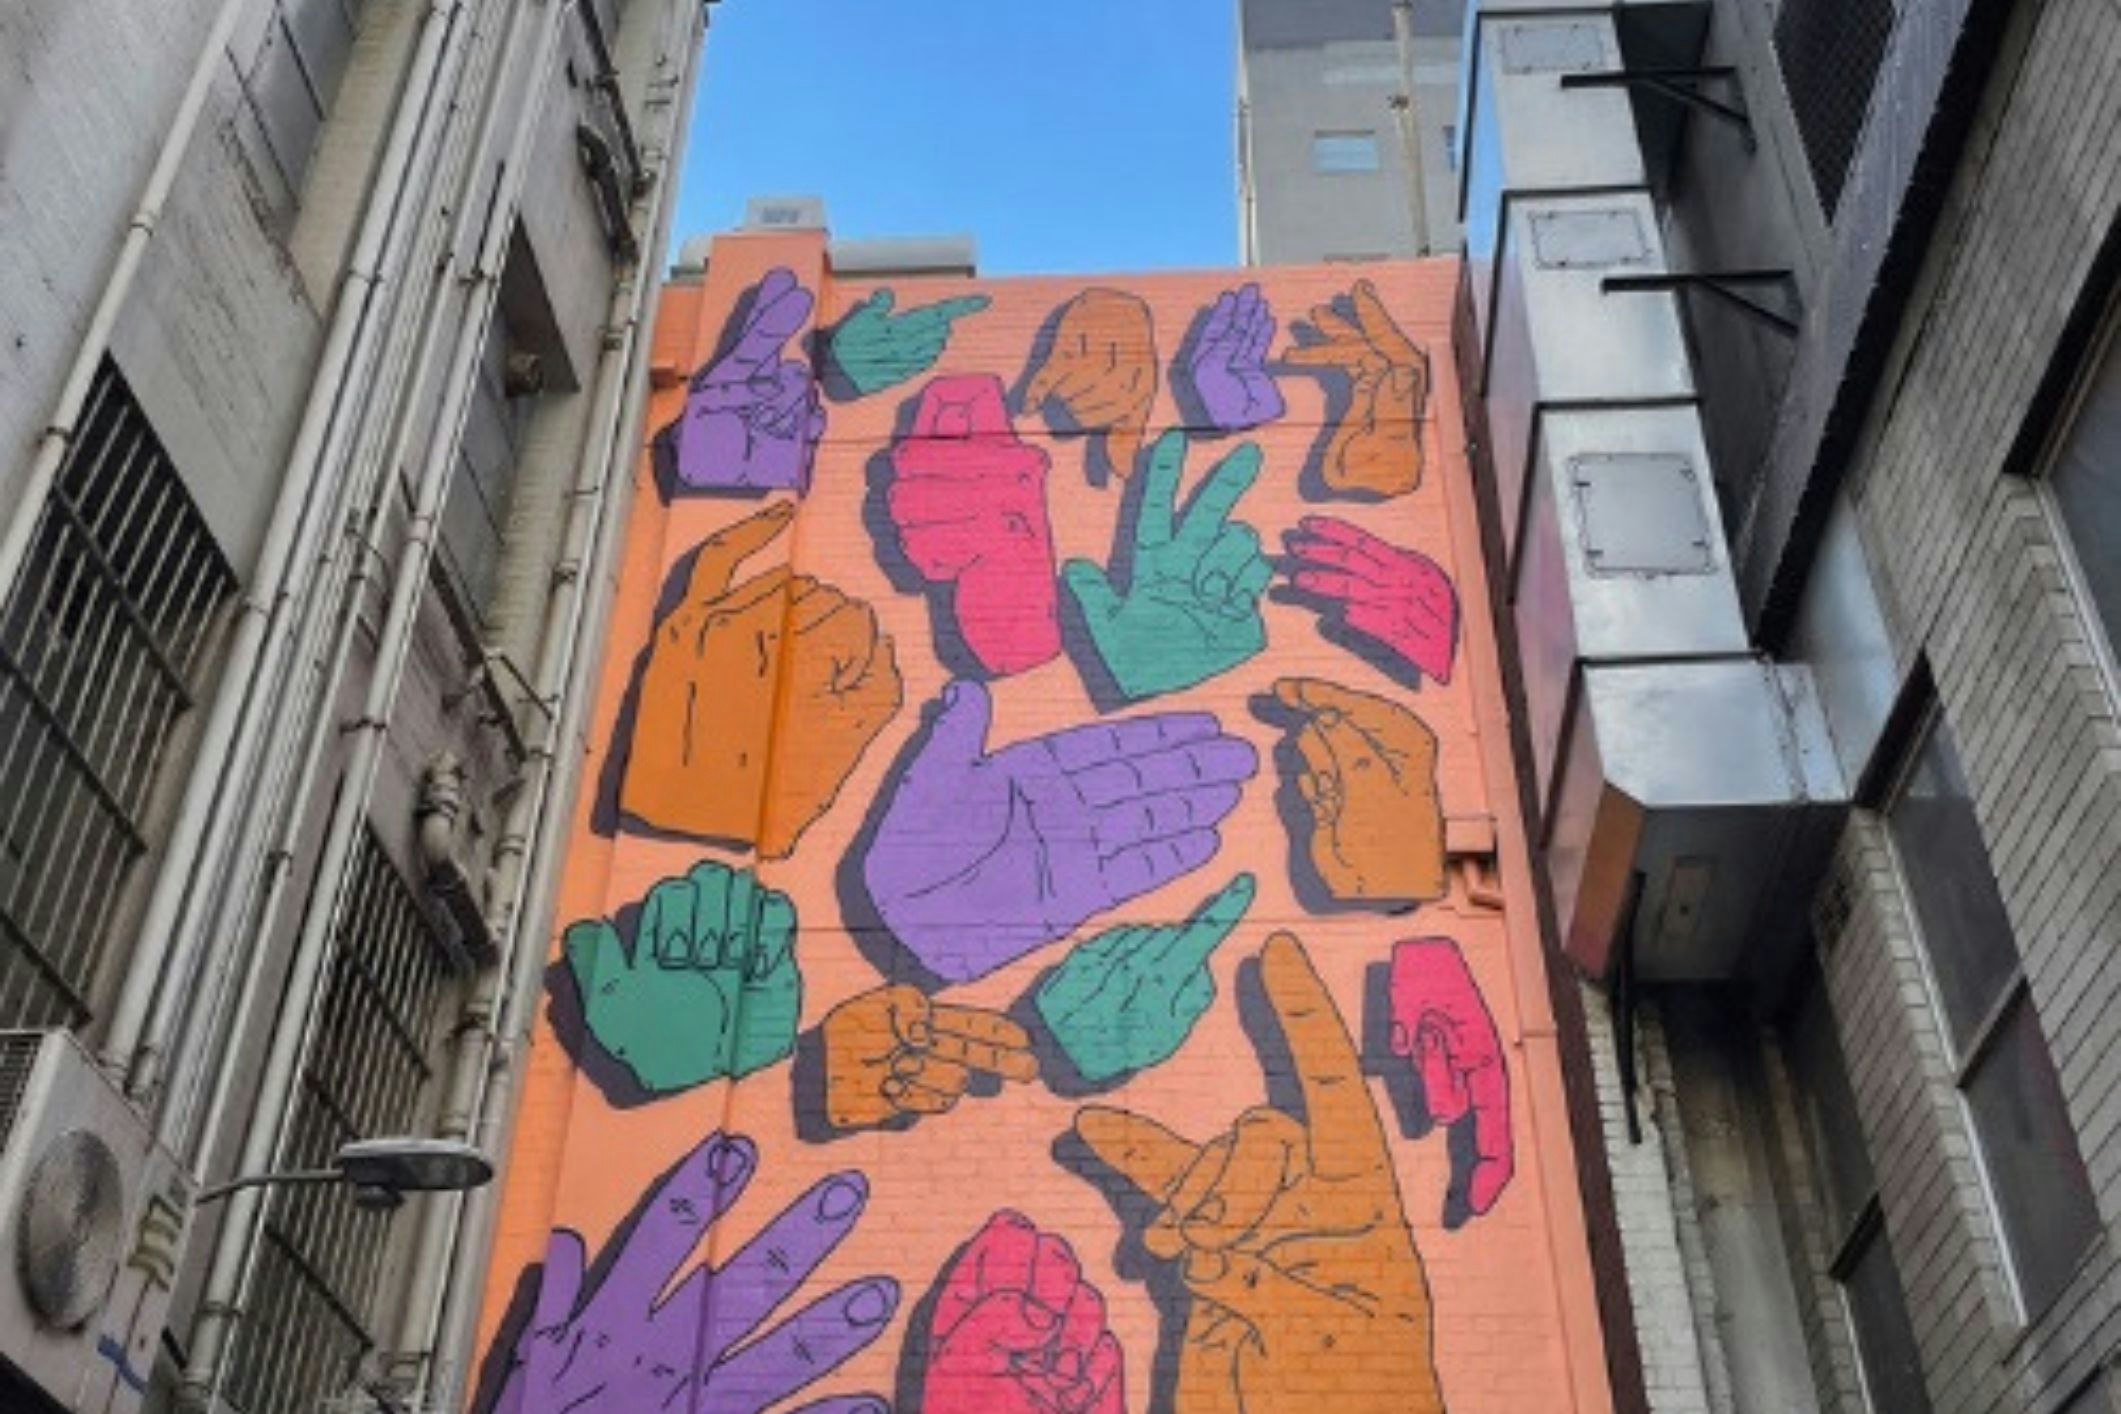 <p>Artwork by Gonketa in Melbourne’s Rainbow Alley. [Source: Nicole Reed via UniSA]</p>
